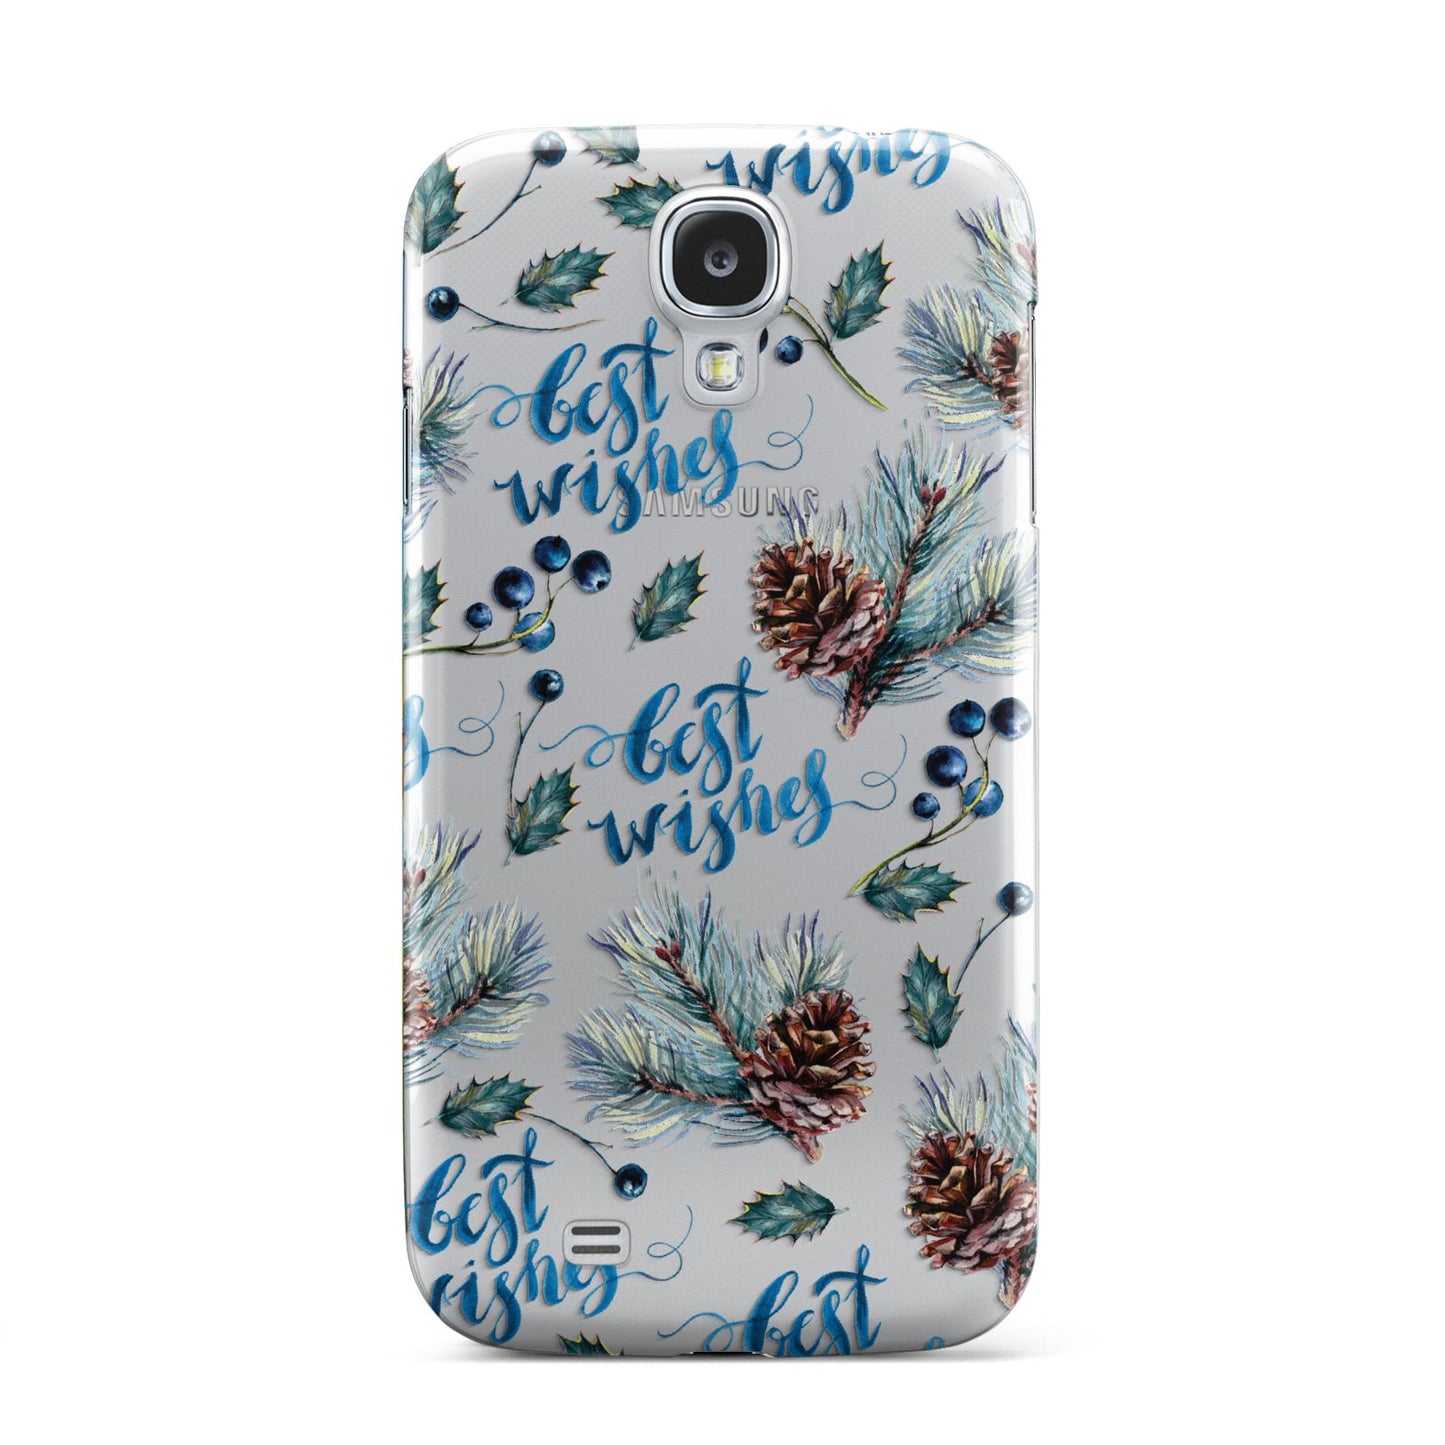 Pine cones wild berries Samsung Galaxy S4 Case